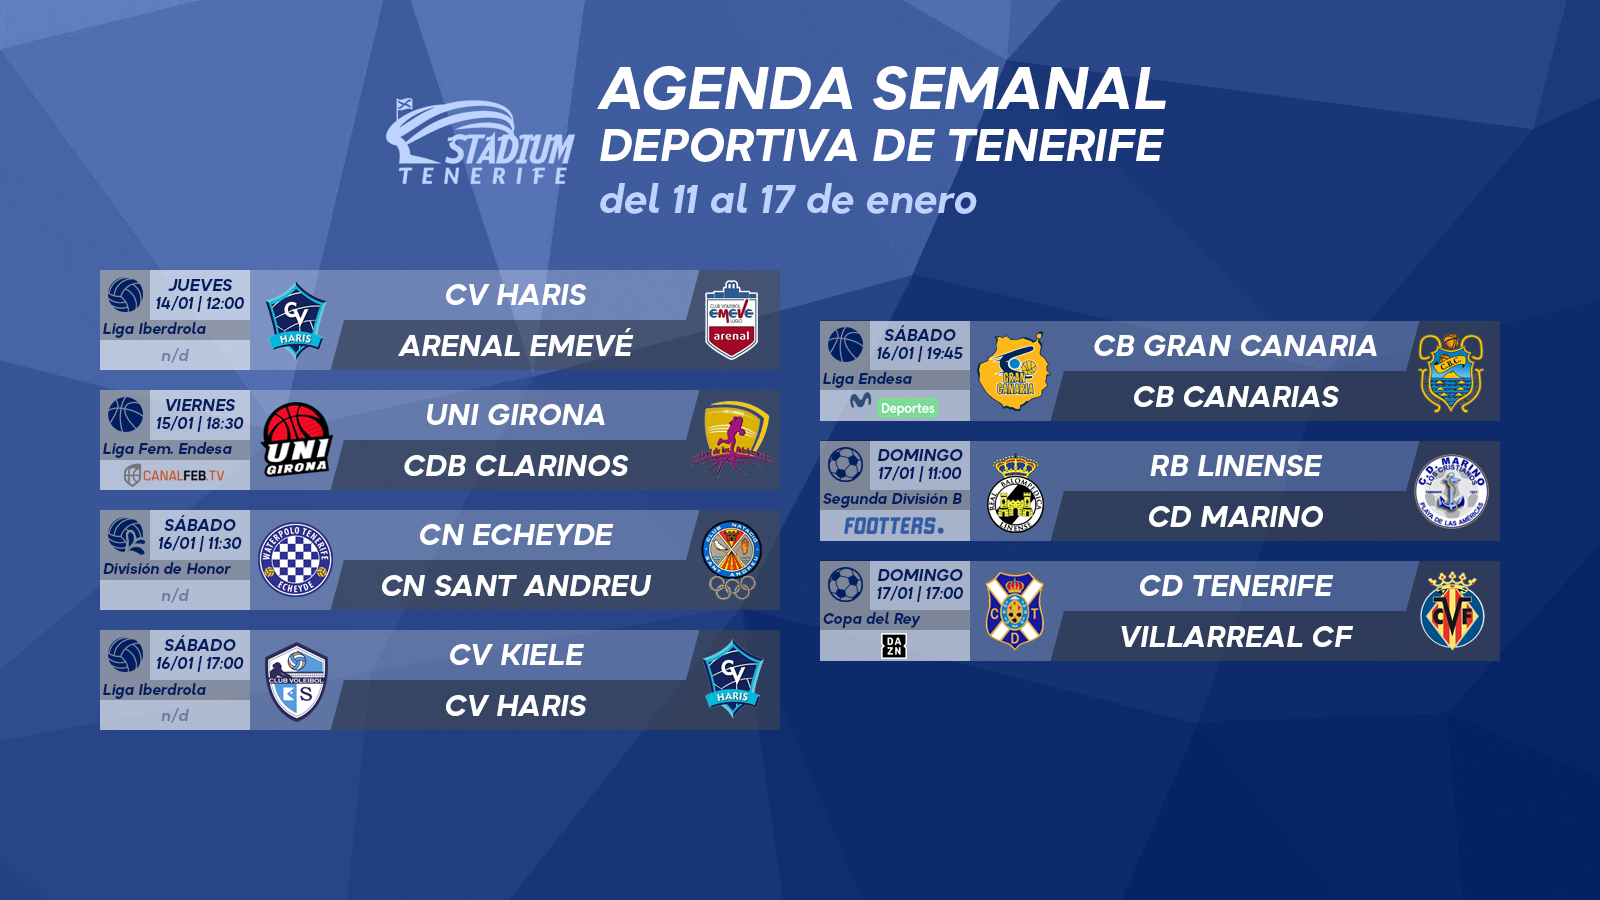 Agenda Semanal Deportiva de Tenerife (11 al 17 de enero)